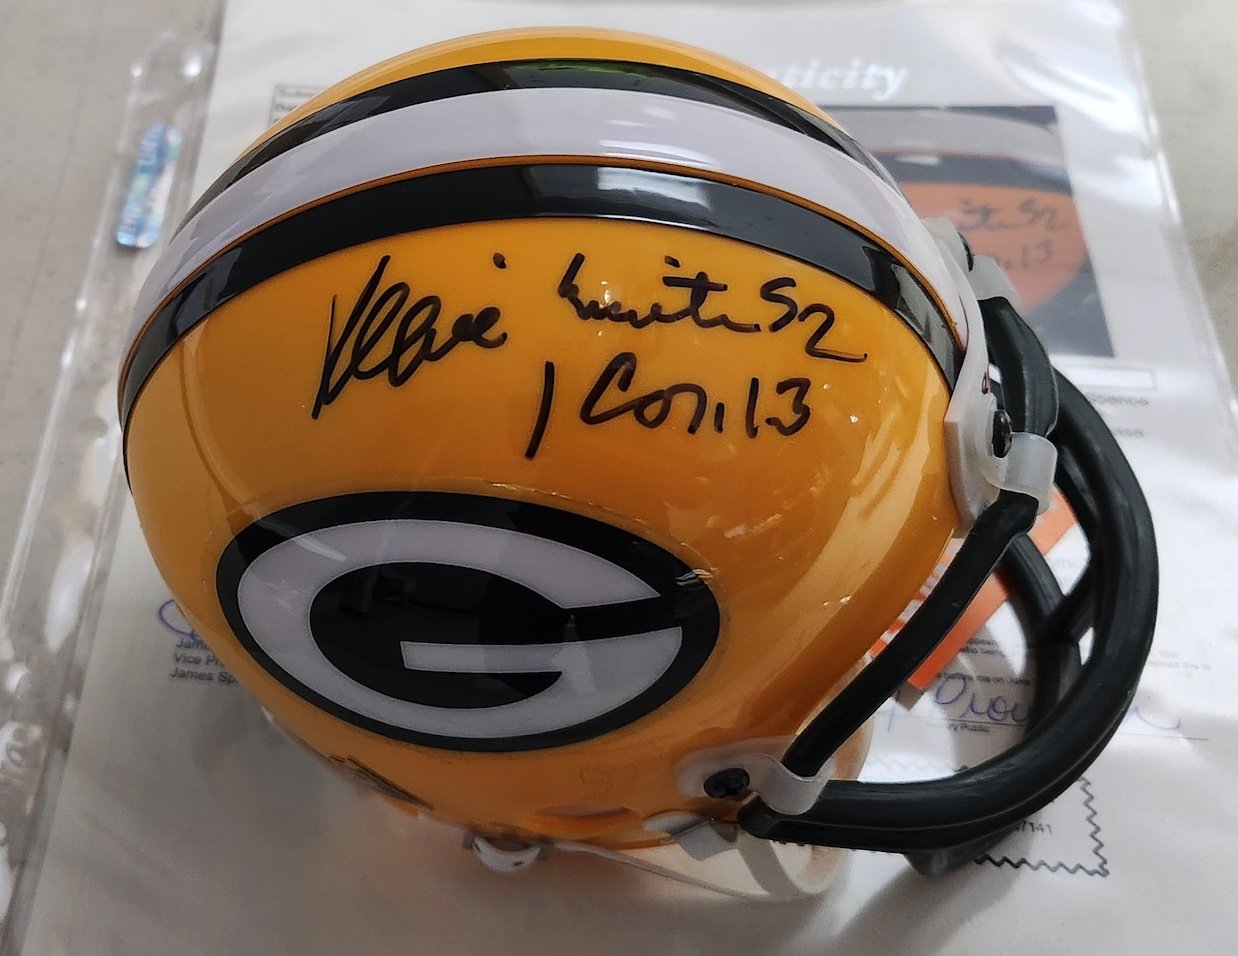 Reggie White Signed Autographed Green Bay Packers Mini Helmet JSA